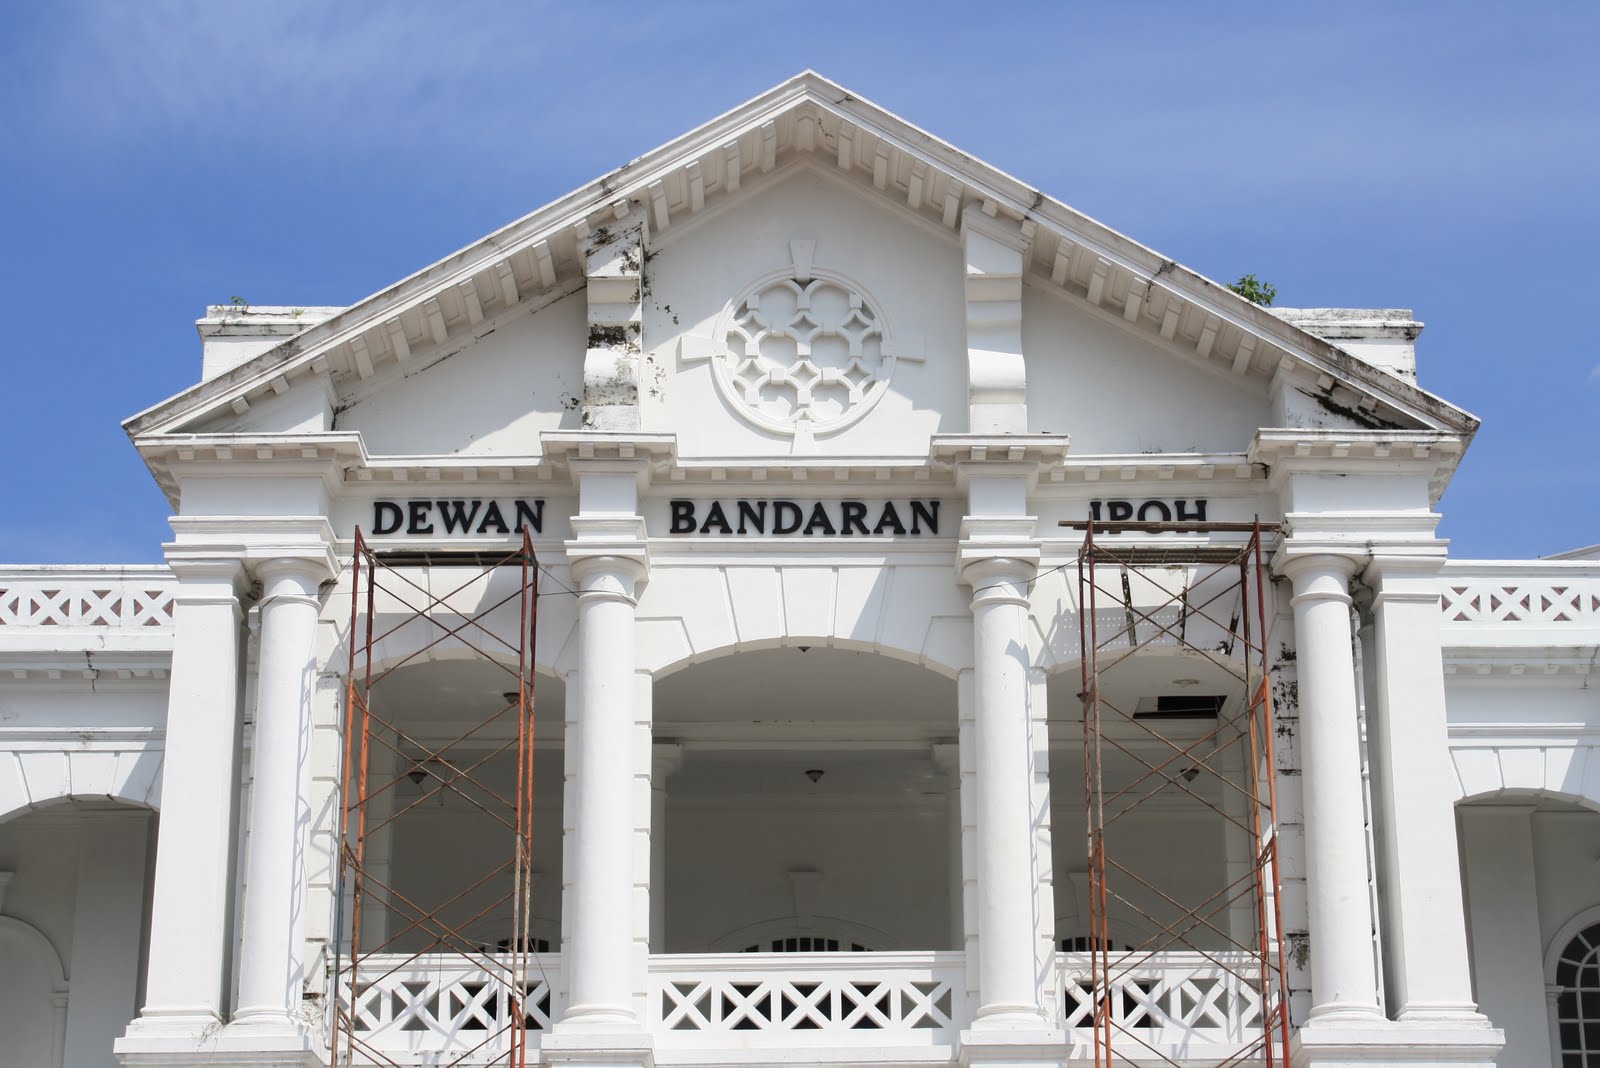 Images of Ipoh: Town Hall is "Dewan Bandaran Ipoh"